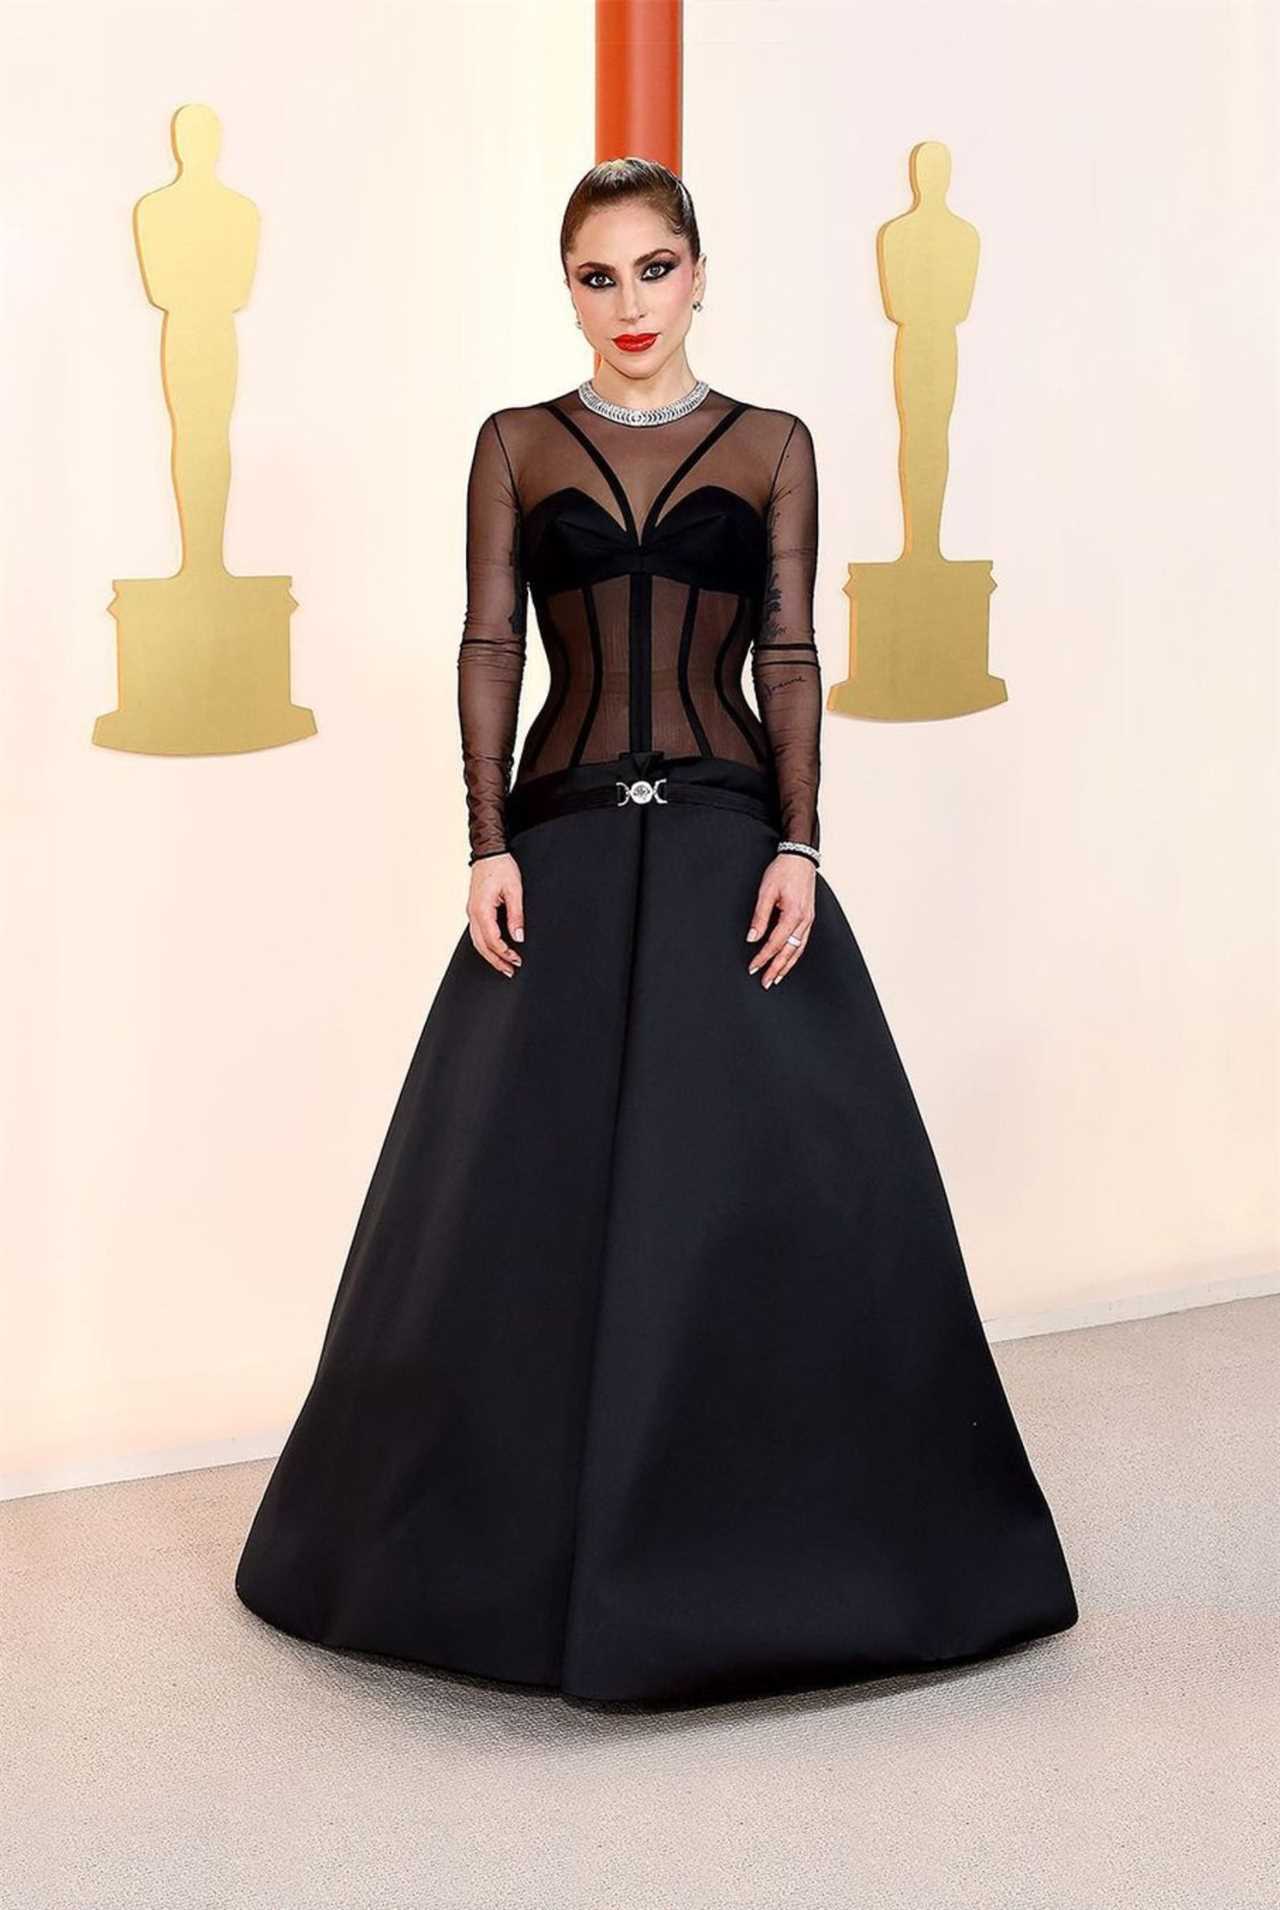 MEGA’s 10 Best Dressed at the Oscars